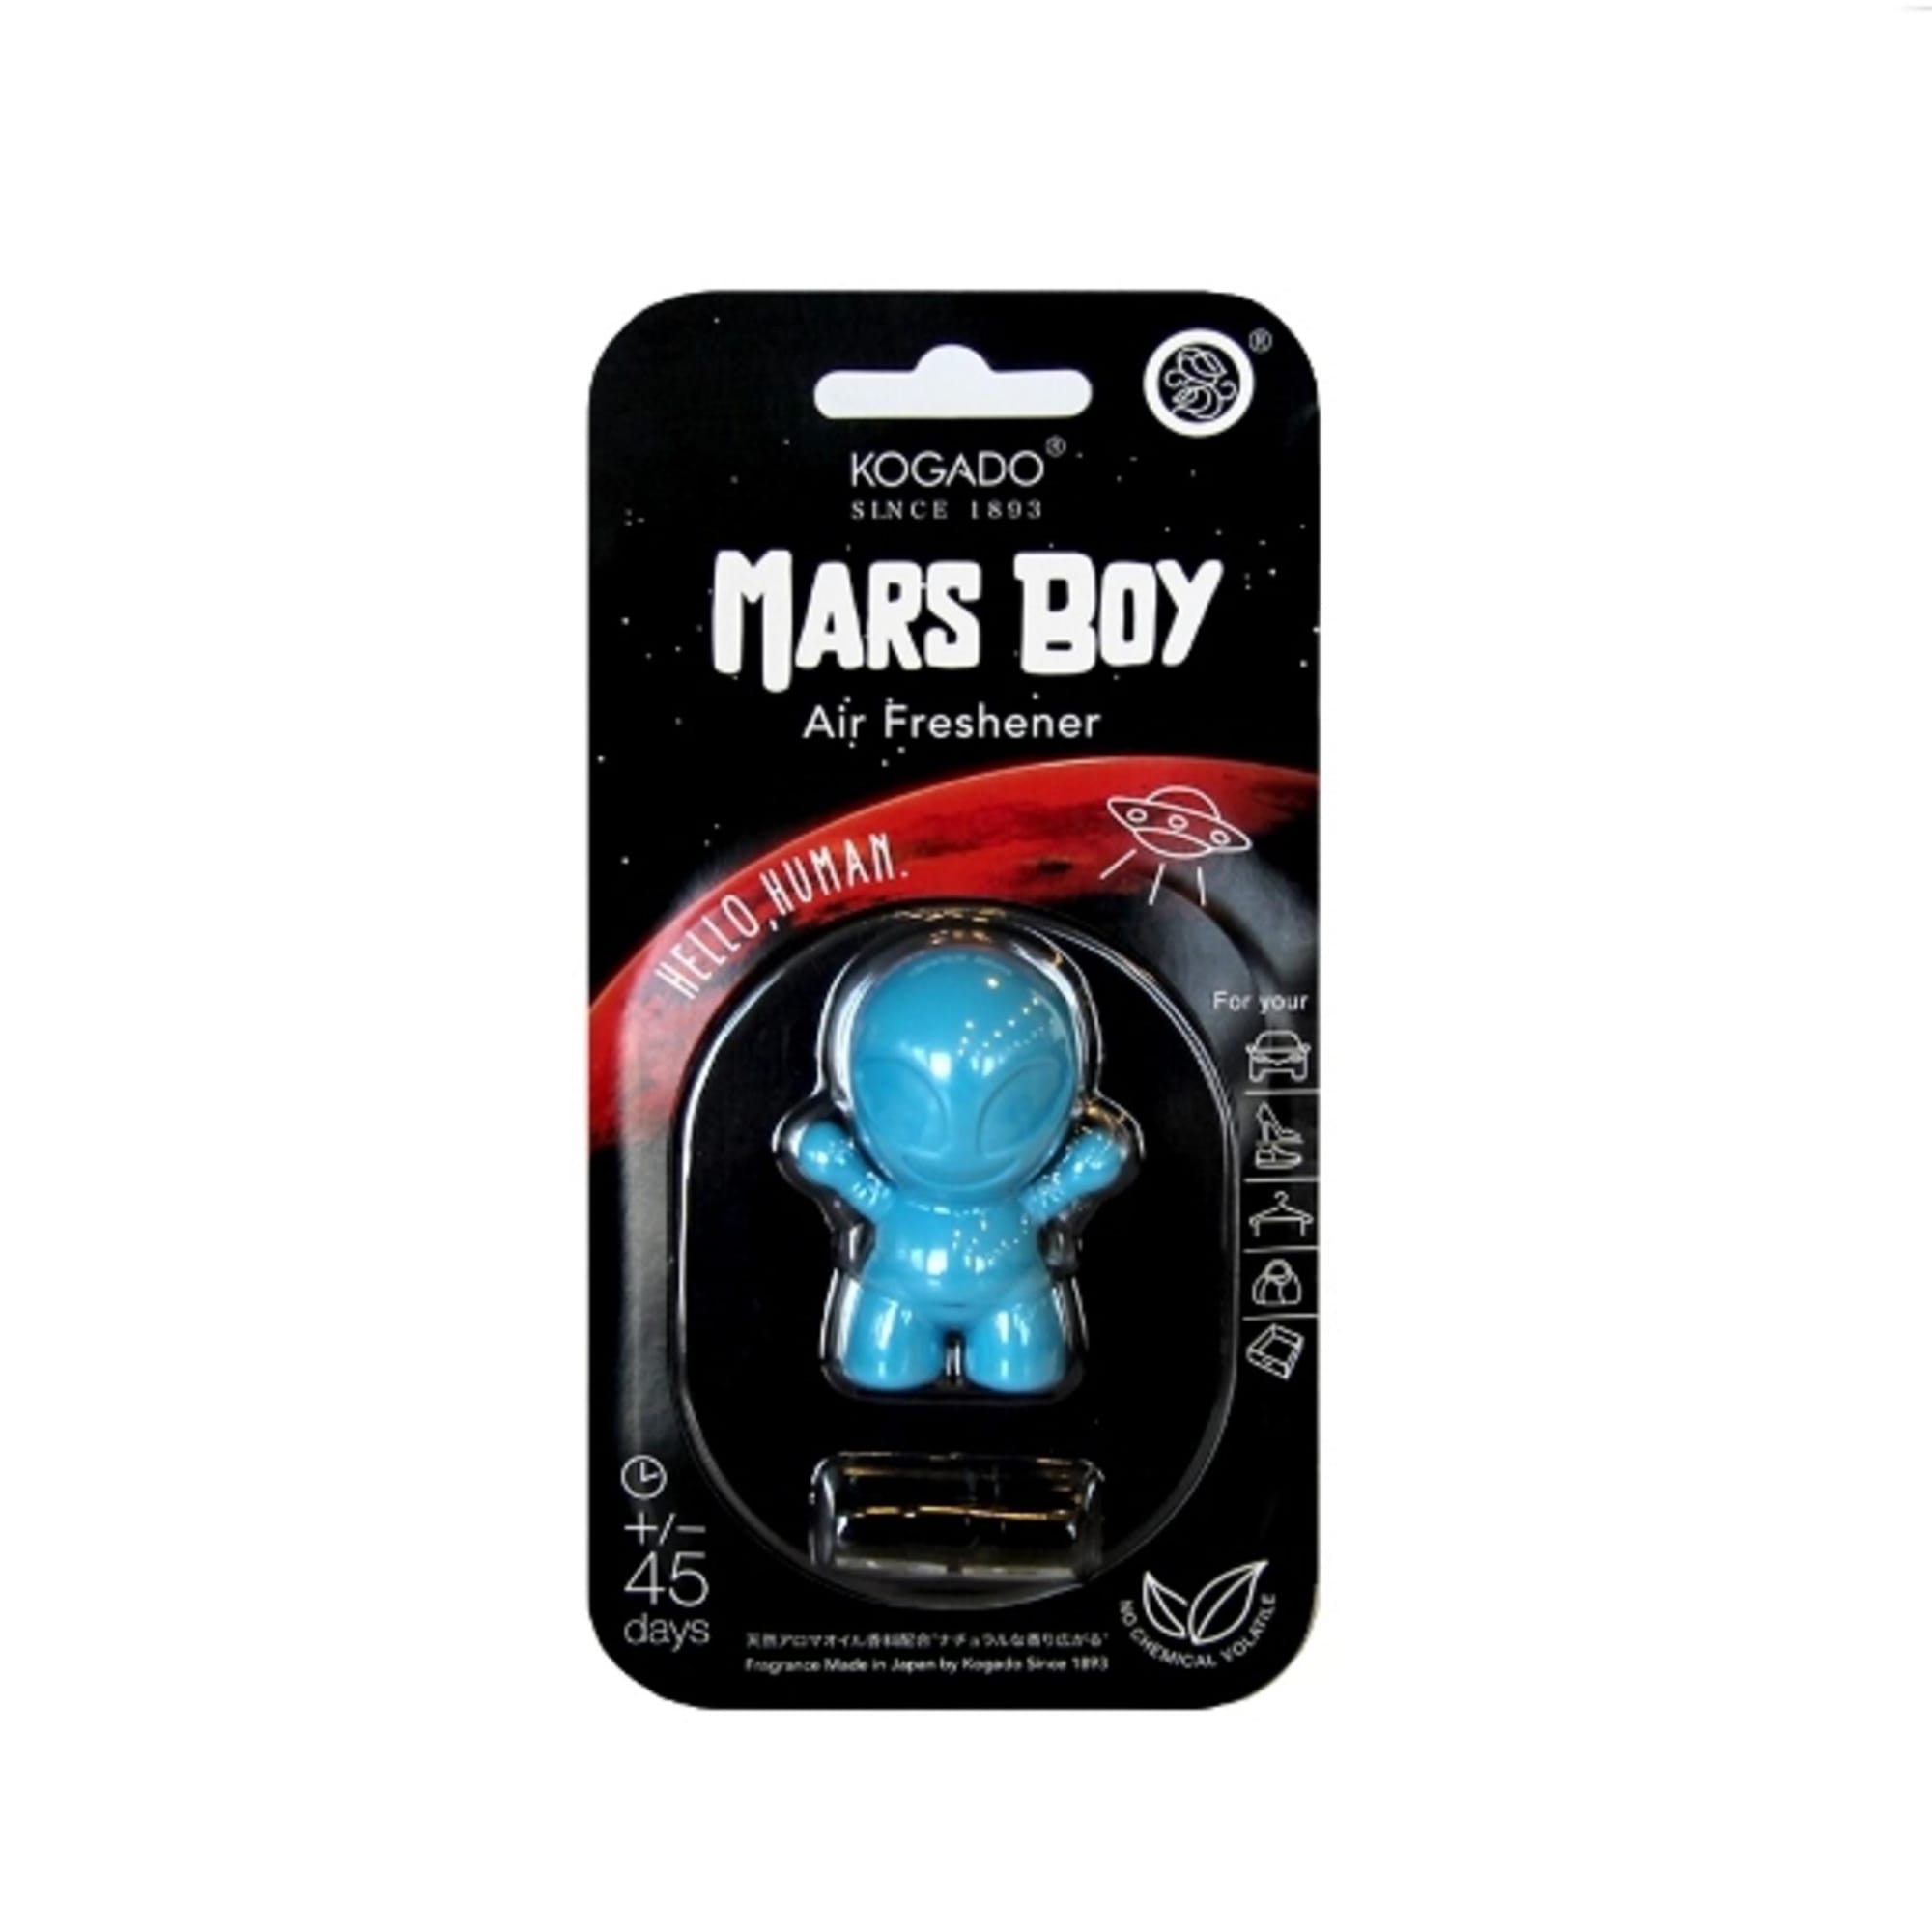 Ароматизатор на кондиционер kogado Mars Boy, полимер, Squash Marine (3322)